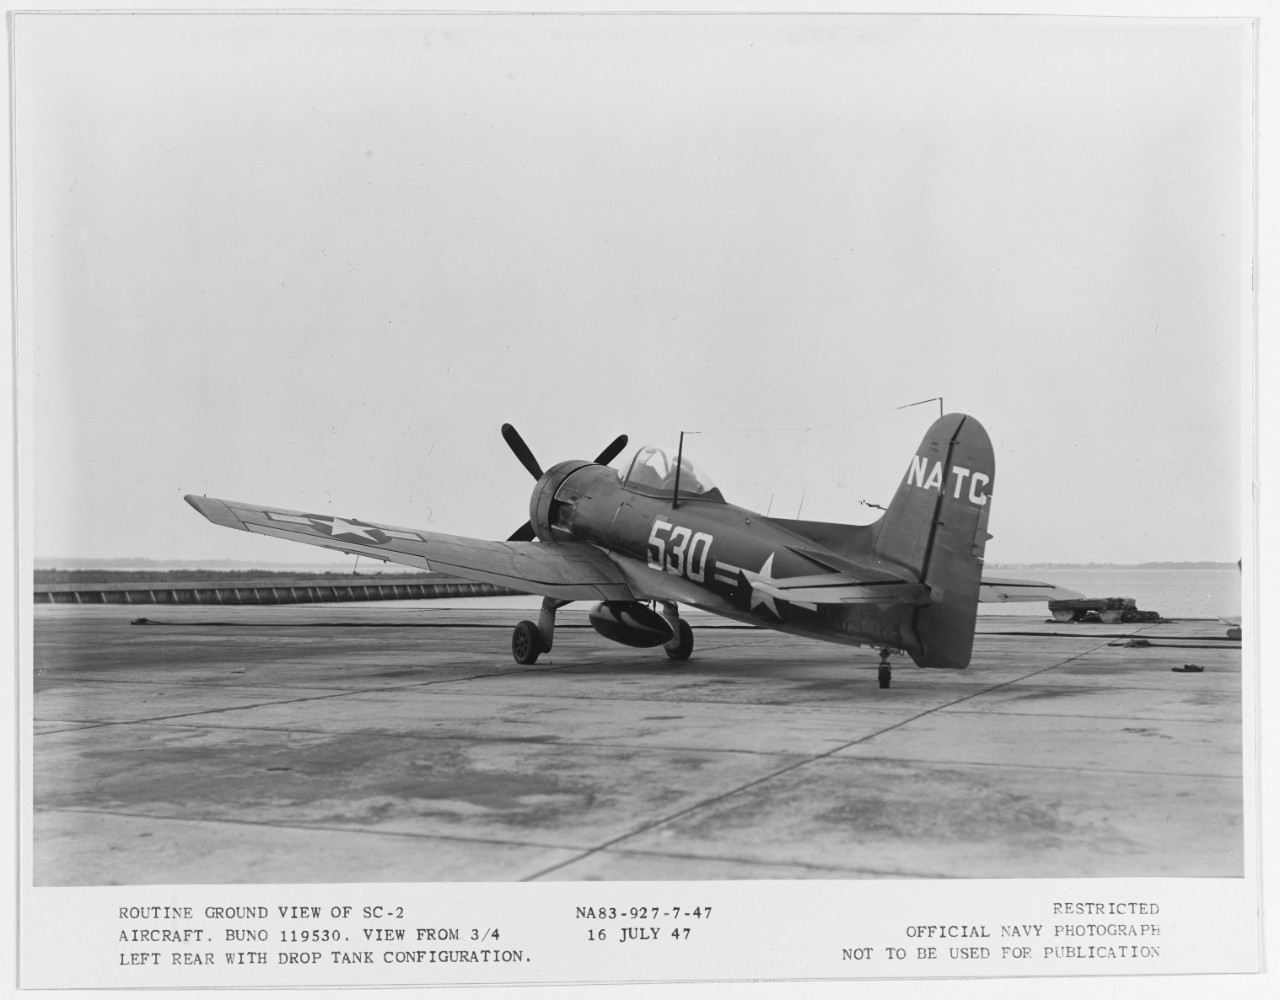 Curtiss SC-2 (BU no. 119530)